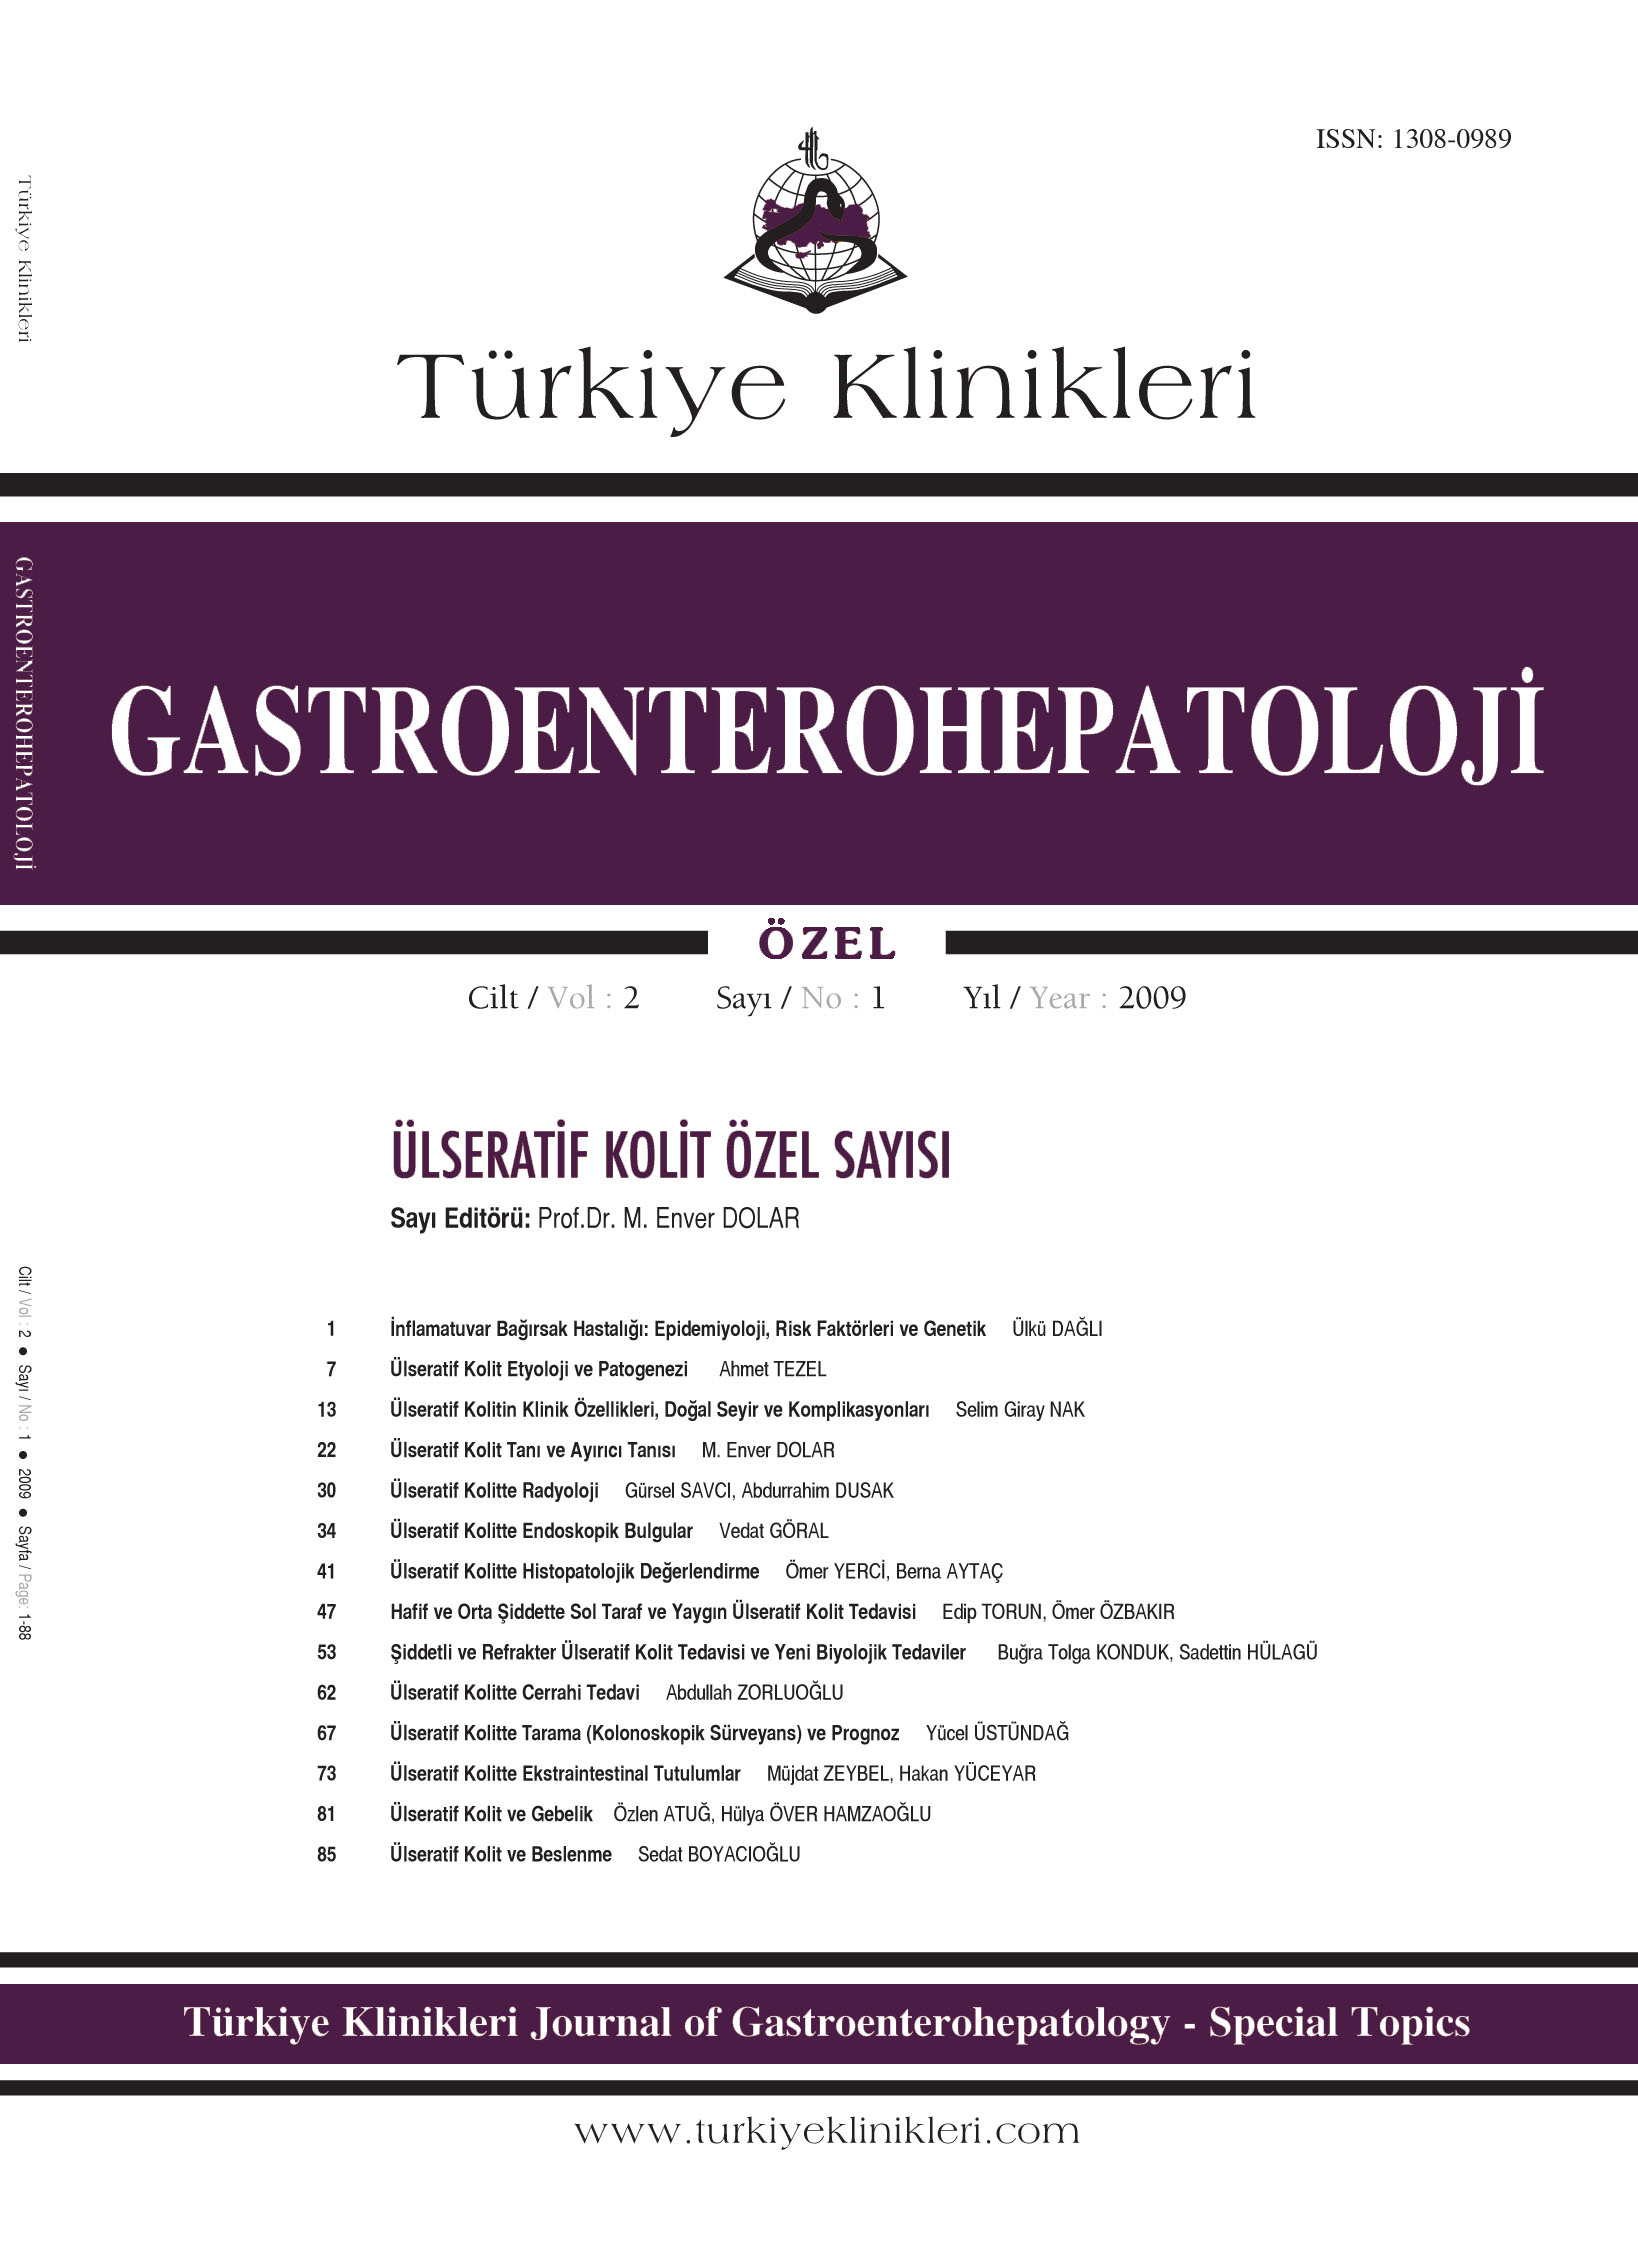  - gastroenterohepatolojiozel2-1-09kapak